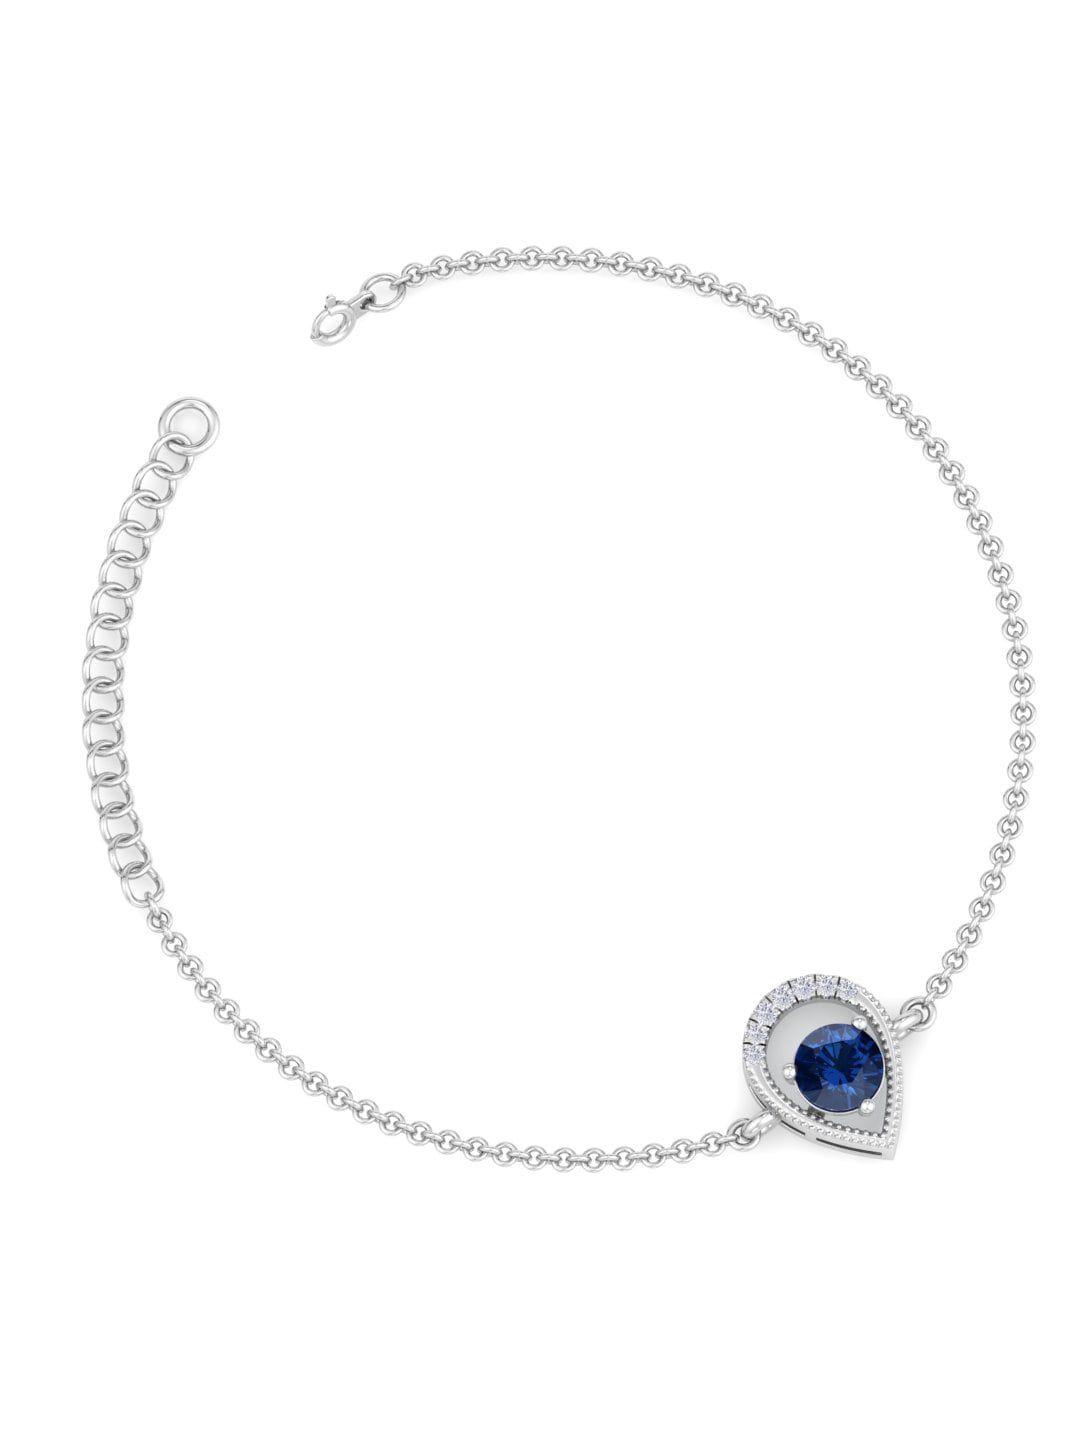 inddus jewels women rhodium-plated cz link bracelet